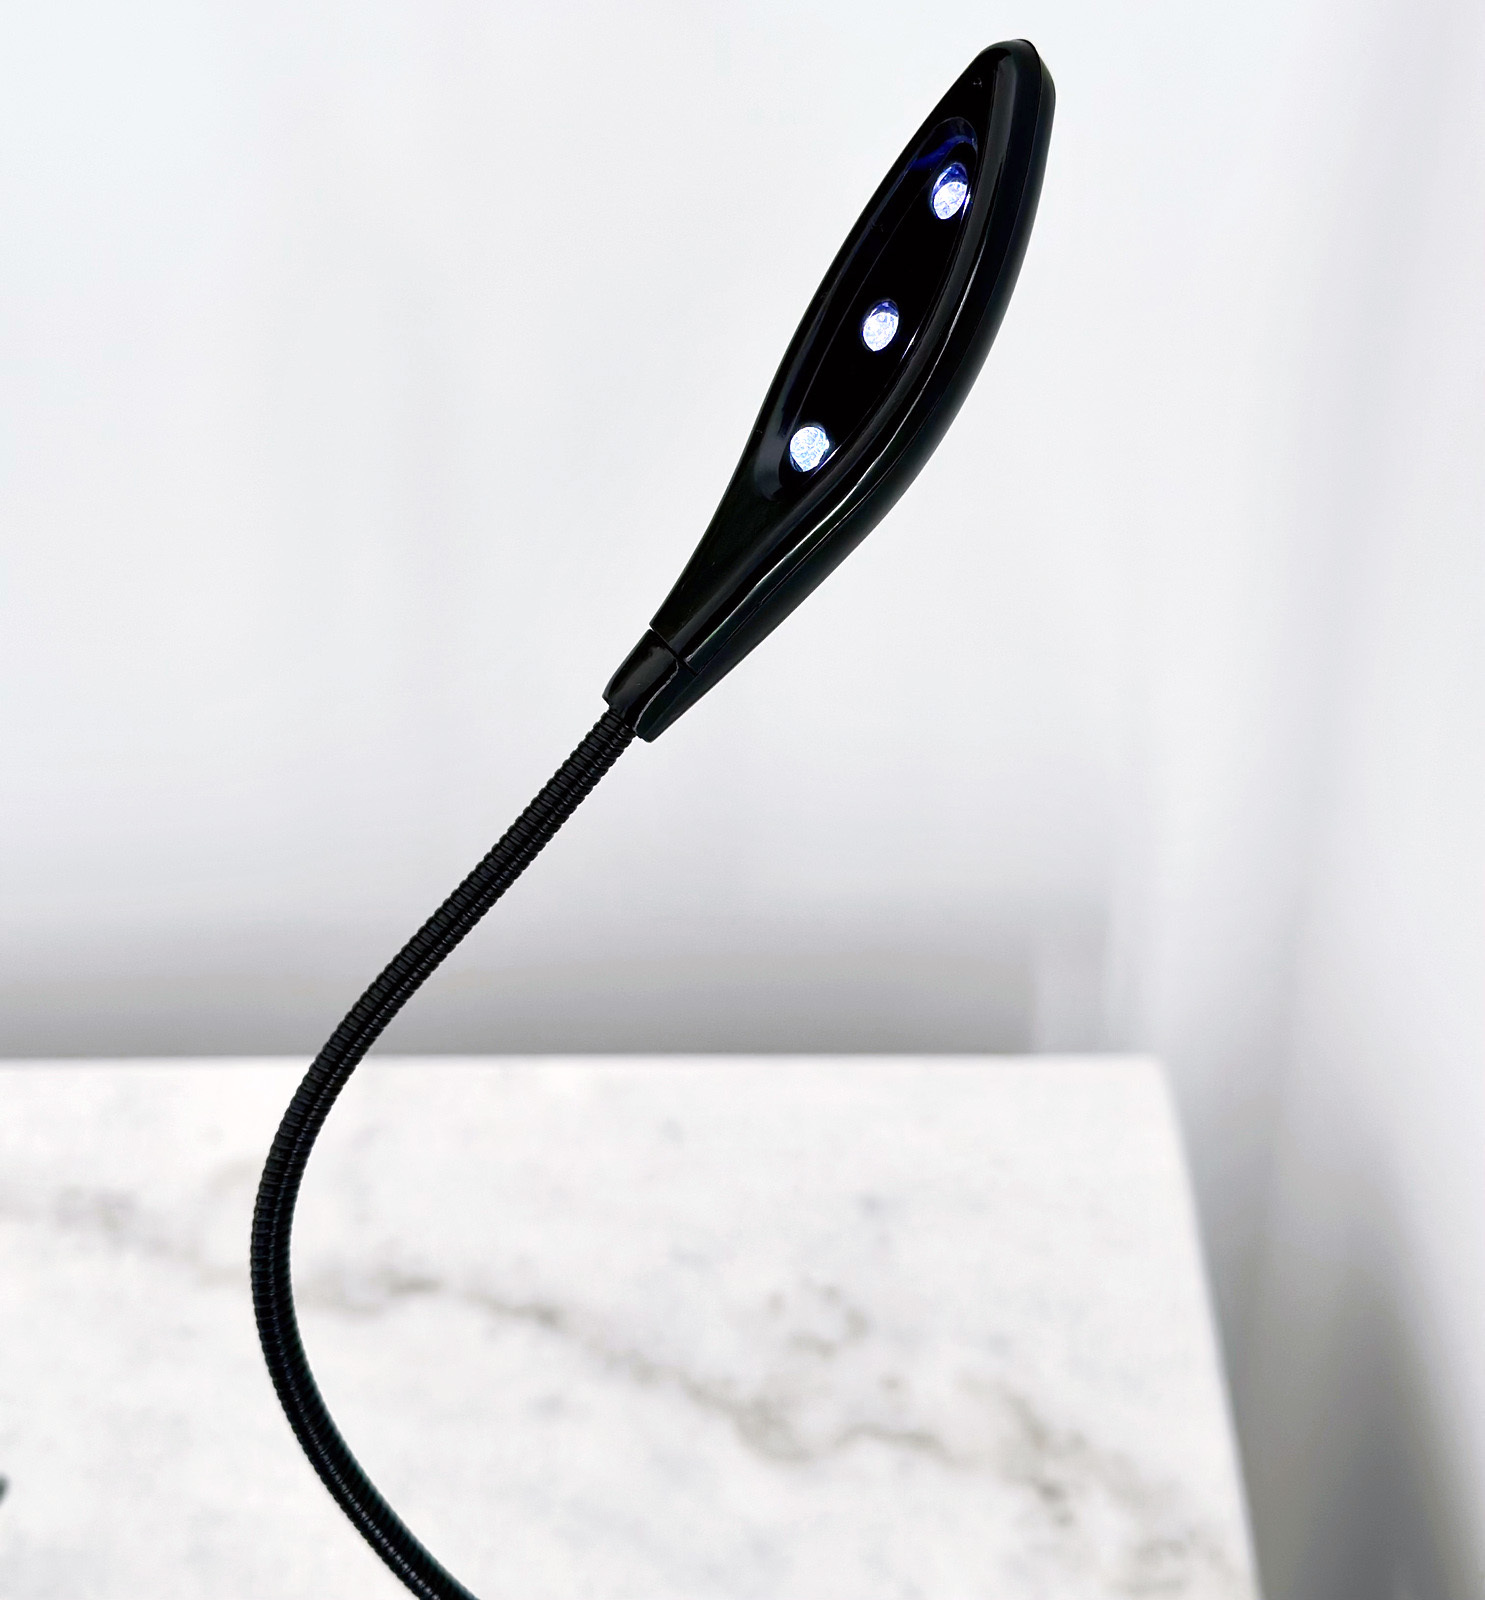 Portable LED Flexi Light Reading Lamp (Black Snake)